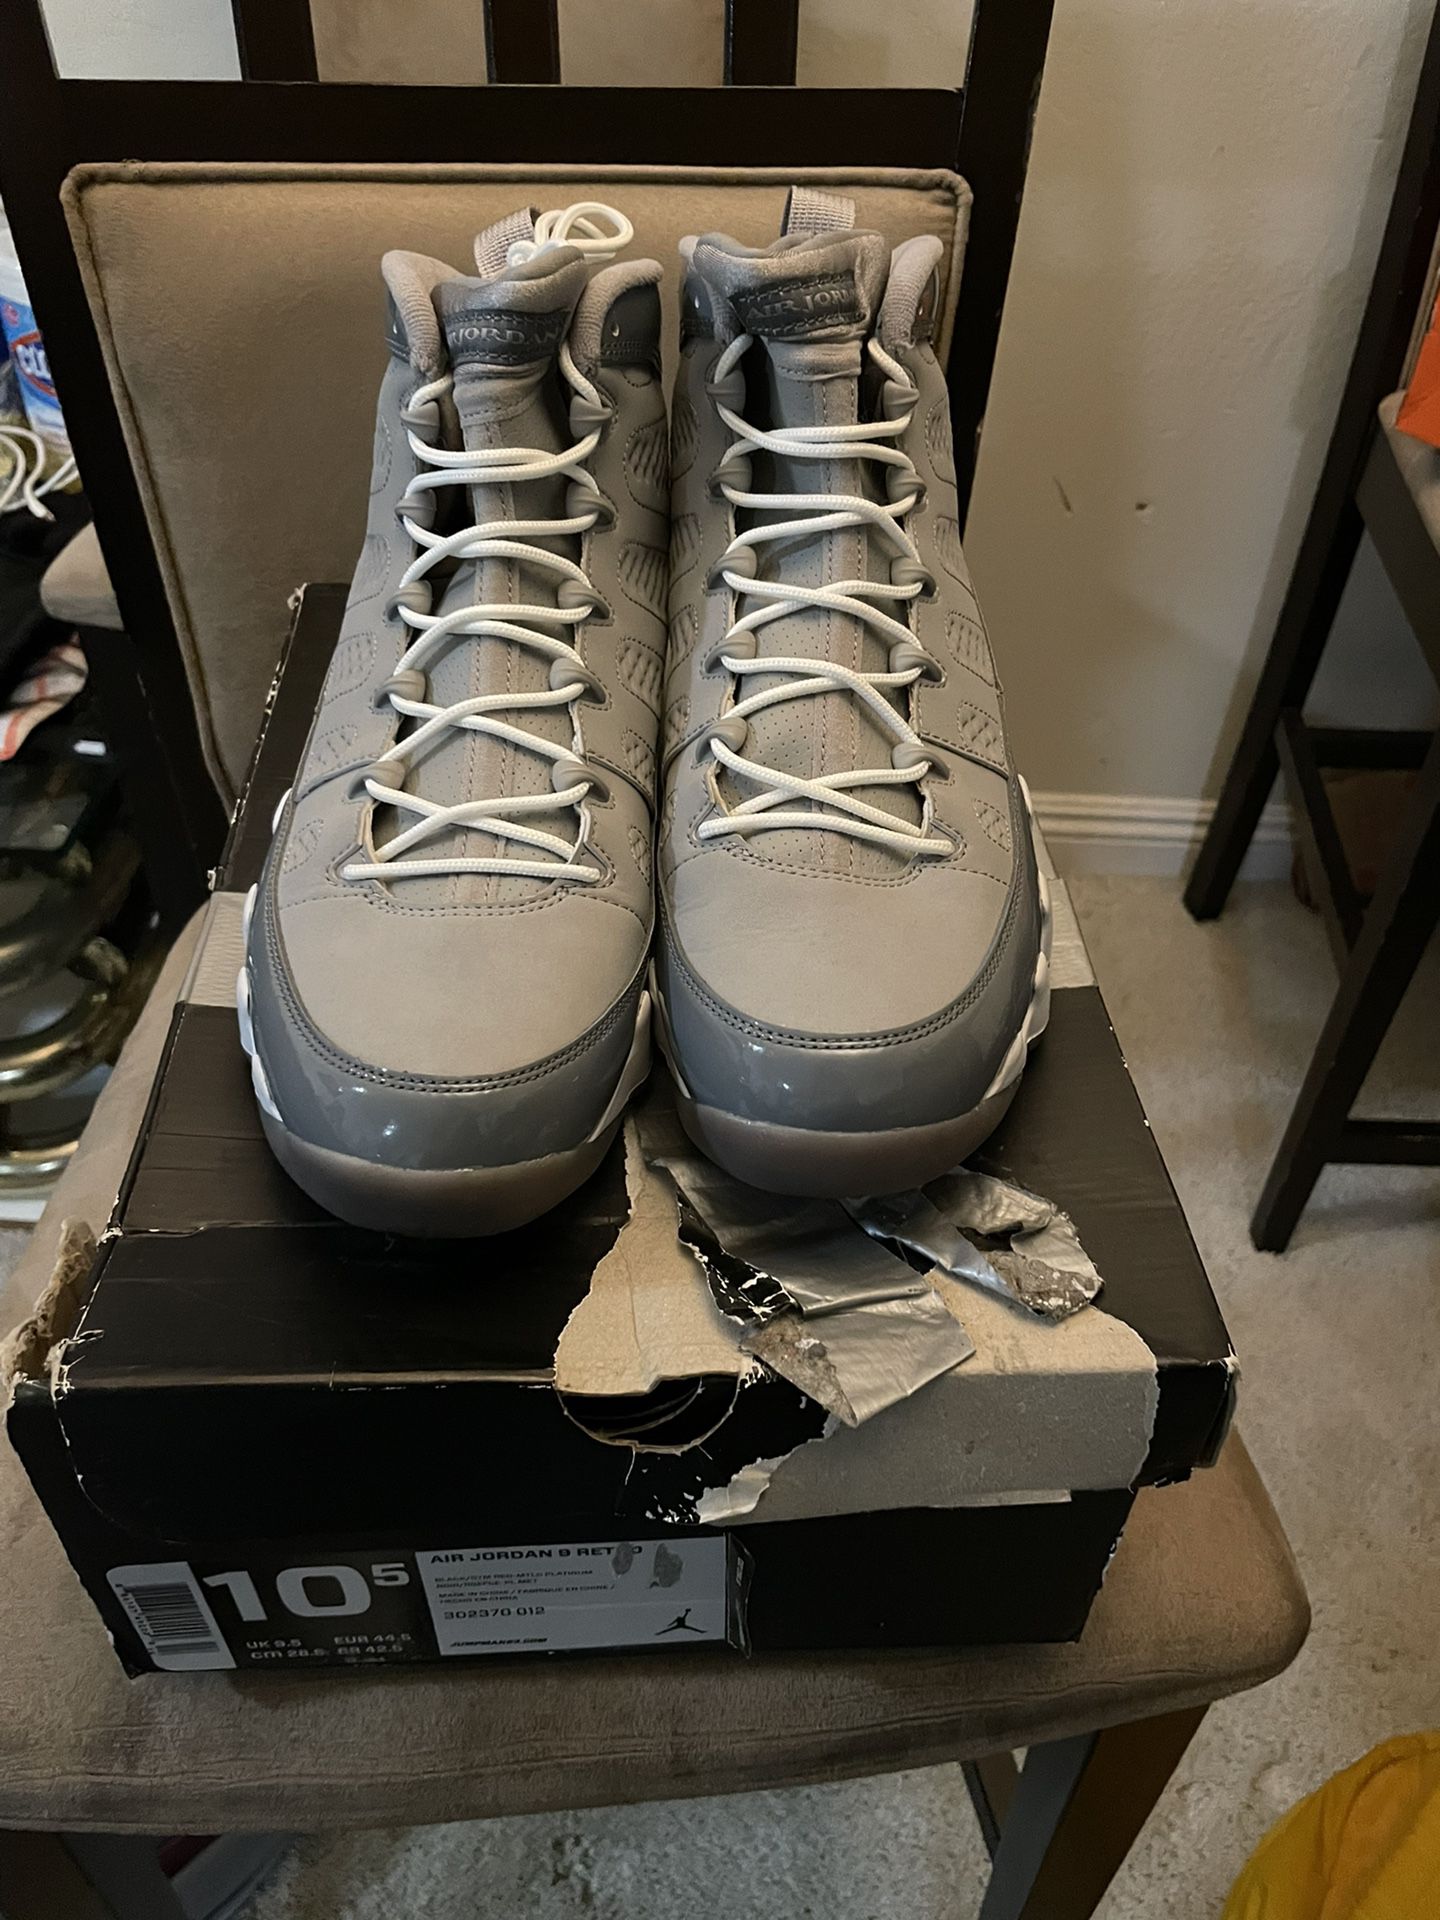 Air Jordan Retro “Cool grey” 9 Size 10.5